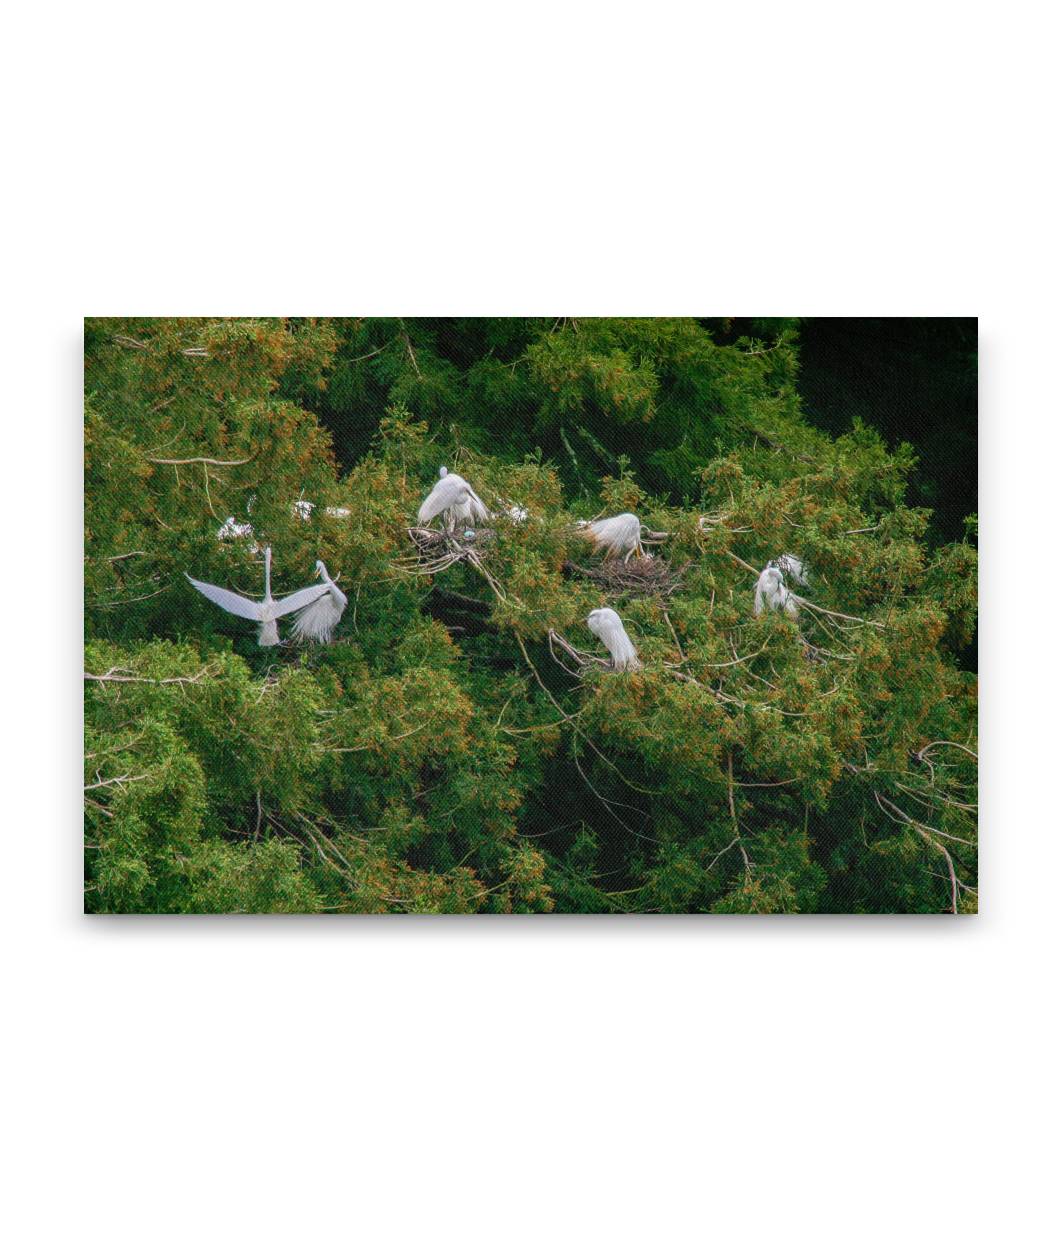 Great Egrets Nesting in Coastal Redwoods, Audubon Canyon Ranch, California, USA